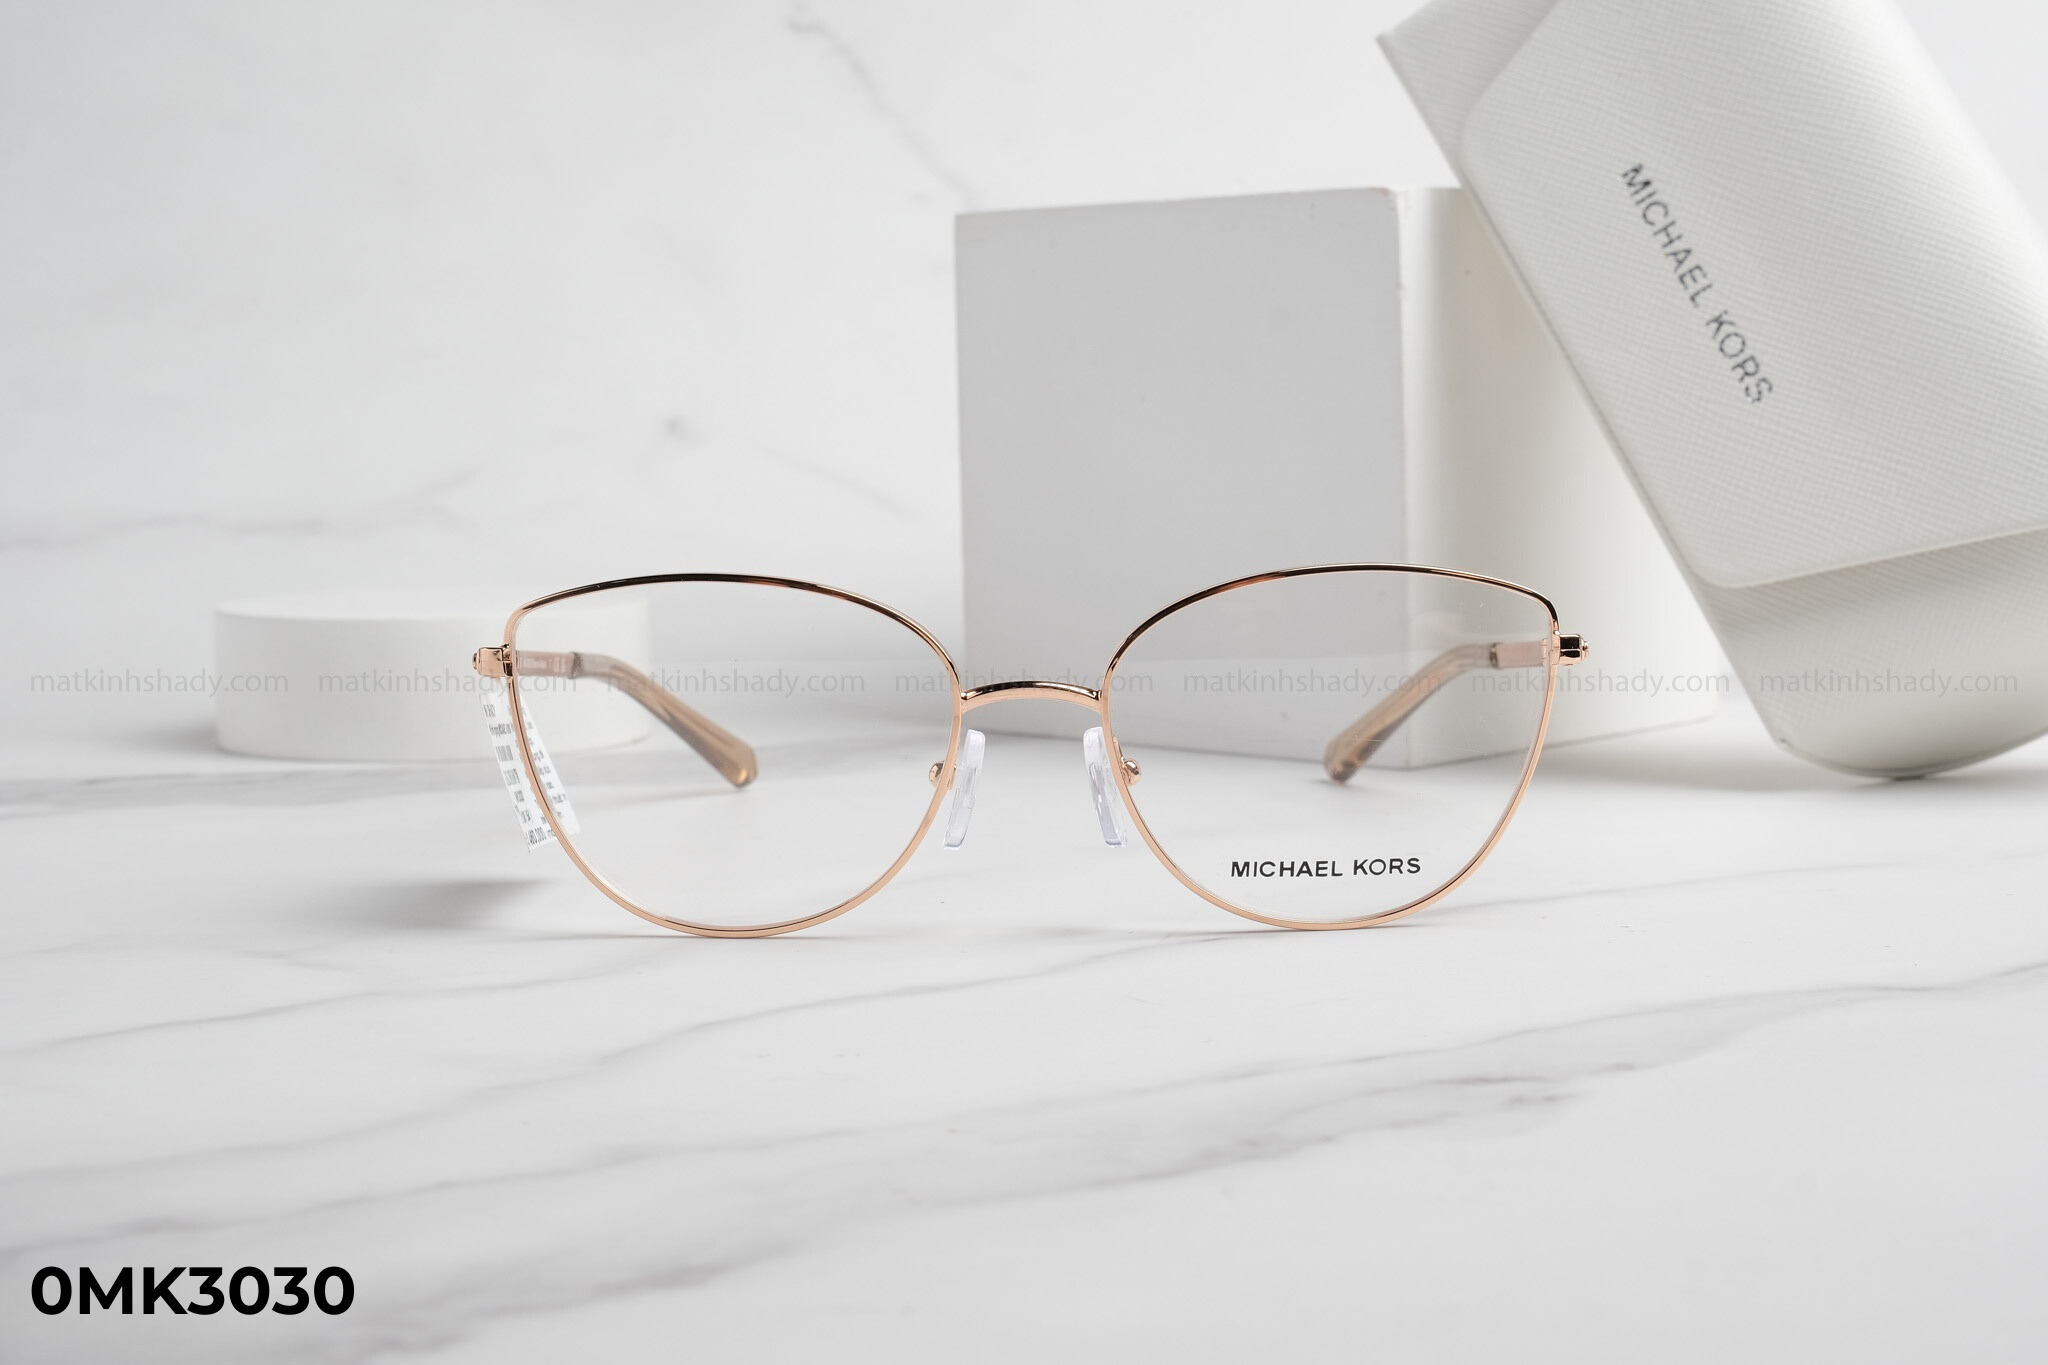  Michael Kors Eyewear - Glasses - 0MK3030 